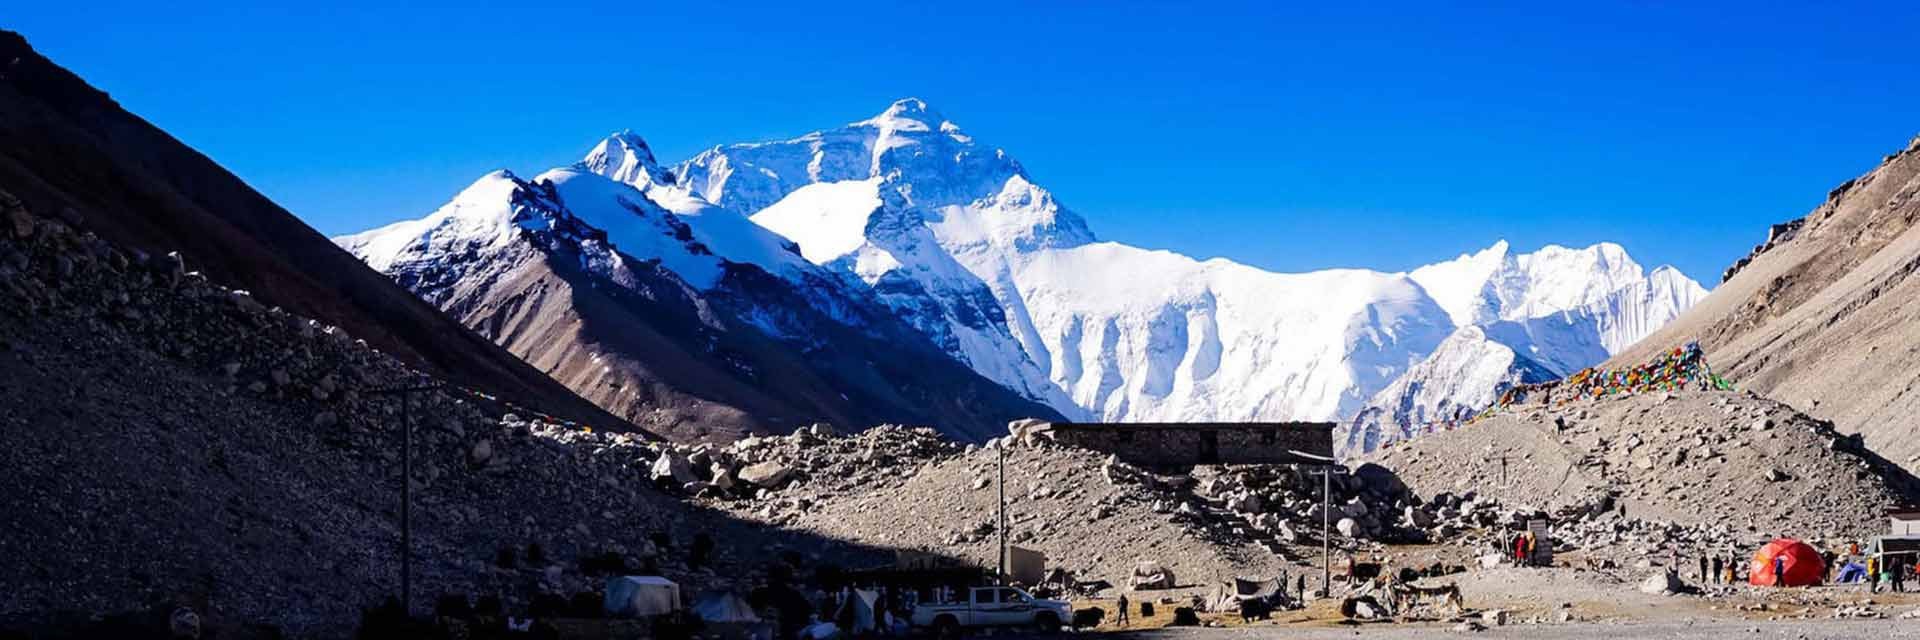 Lhasa Tibet Everest Base Camp